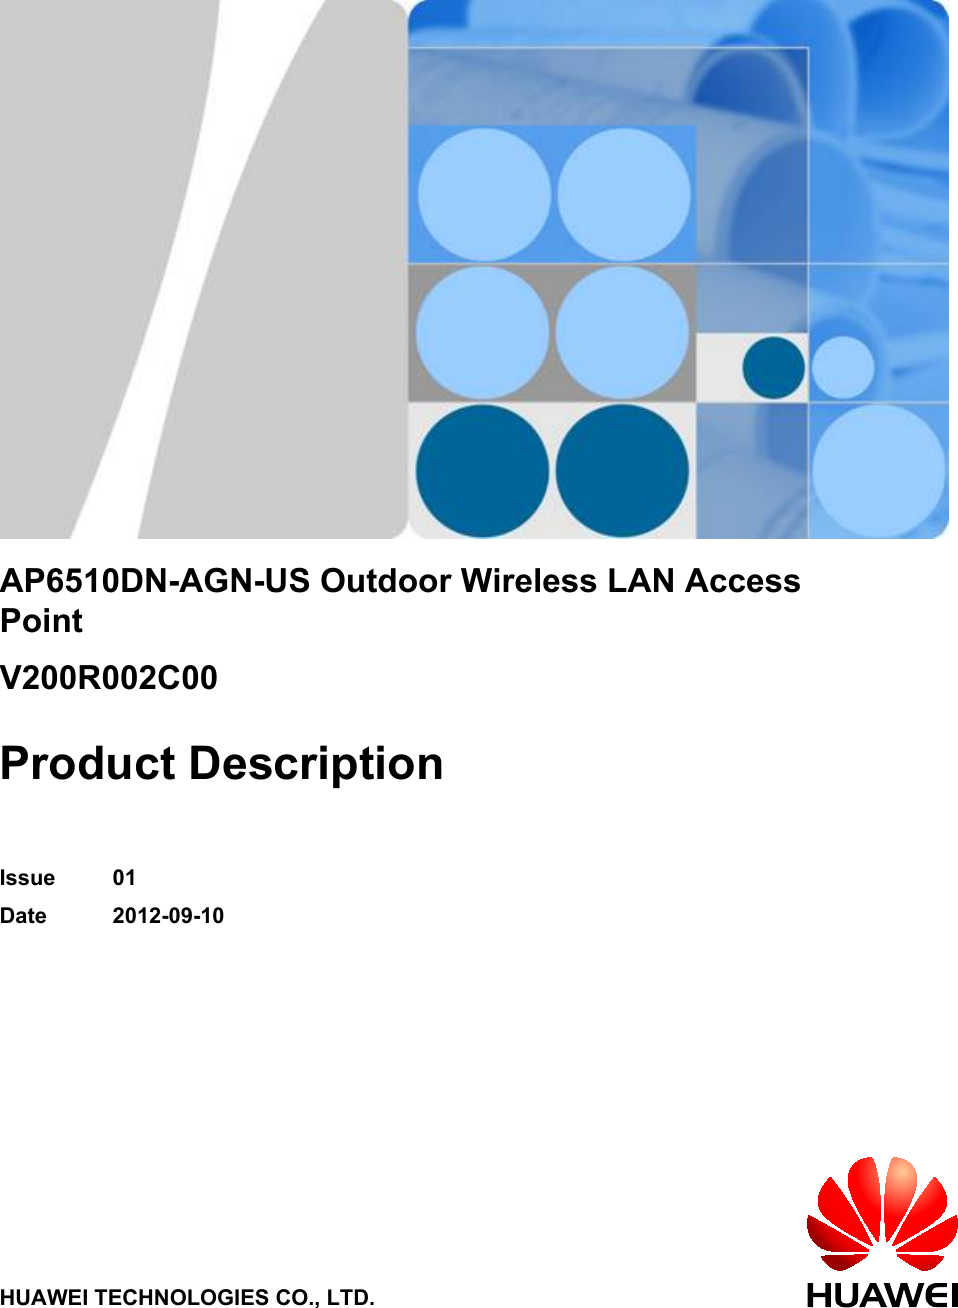 AP6510DN-AGN-US Outdoor Wireless LAN AccessPointV200R002C00Product DescriptionIssue 01Date 2012-09-10HUAWEI TECHNOLOGIES CO., LTD.